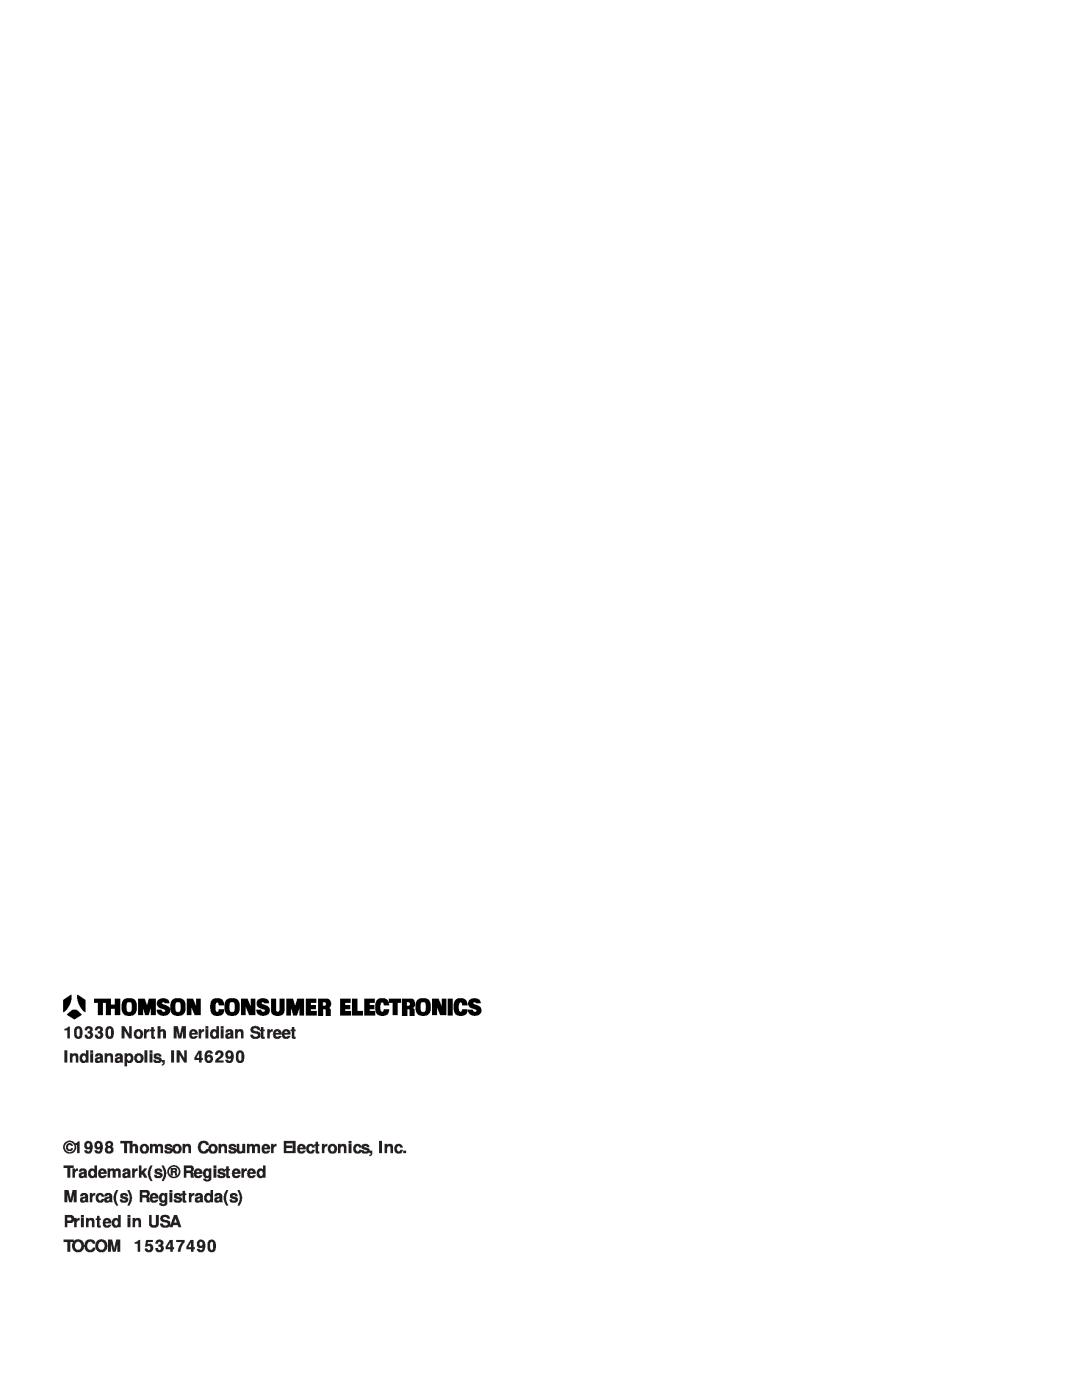 RCA Satellite TV Antenna manual Final Installation, Thomson Consumer Electronics, Inc Trademarks Registered 